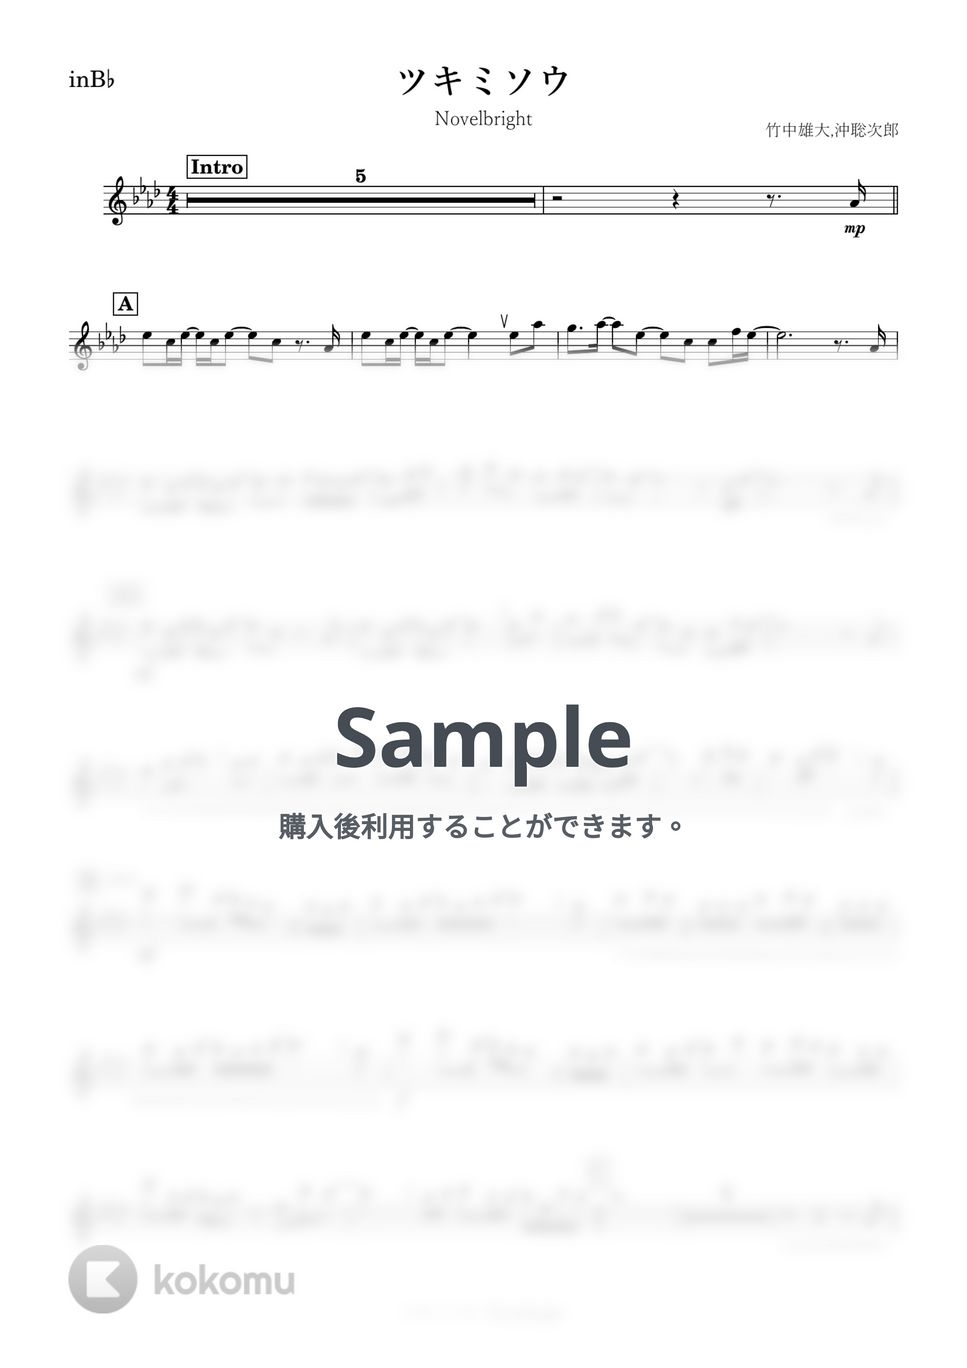 Novelbright - ツキミソウ (B♭) by kanamusic